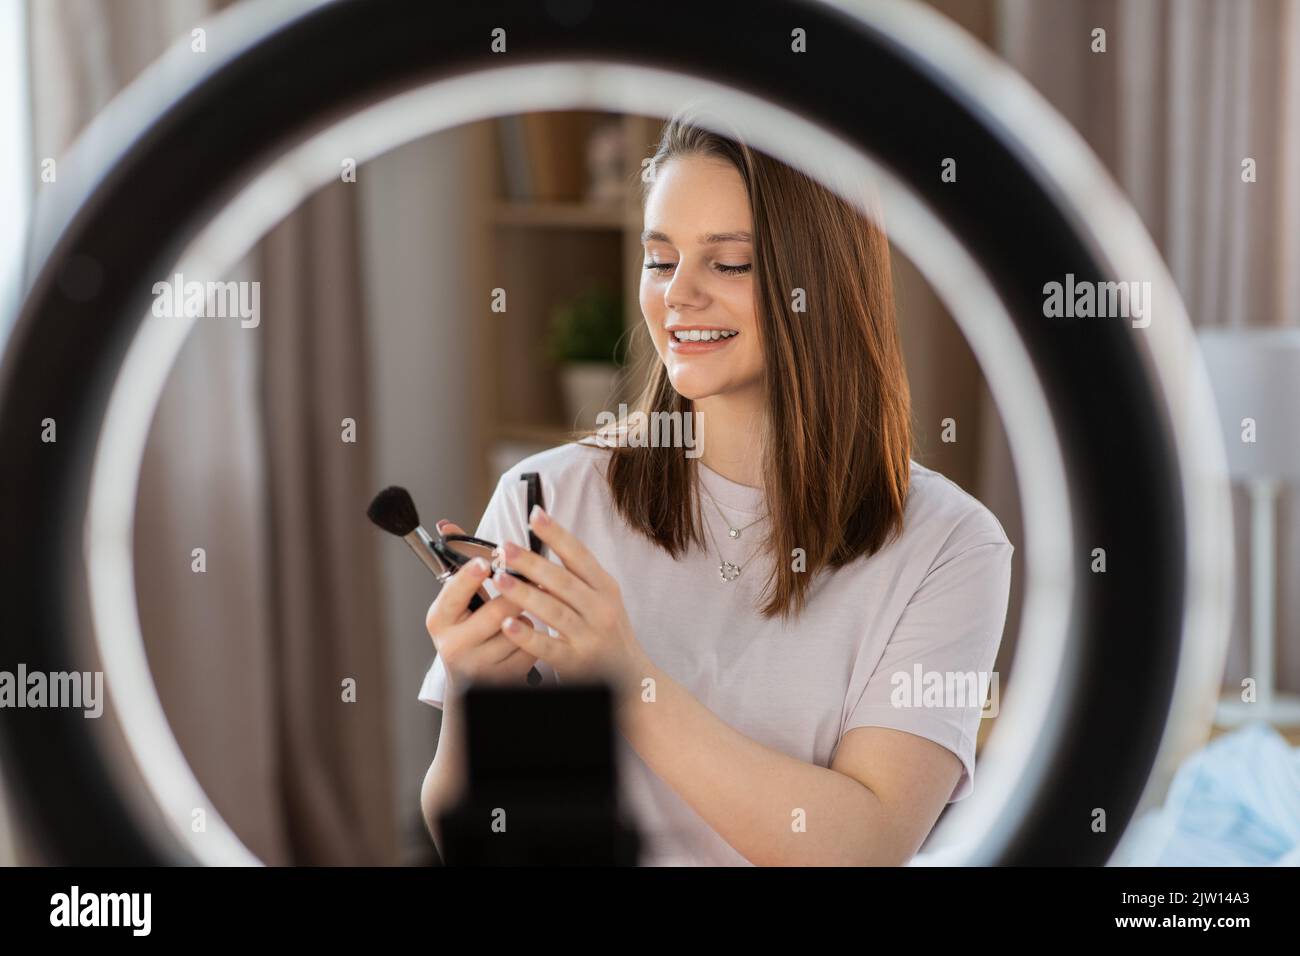 girl blogger with ring light applying make up Stock Photo